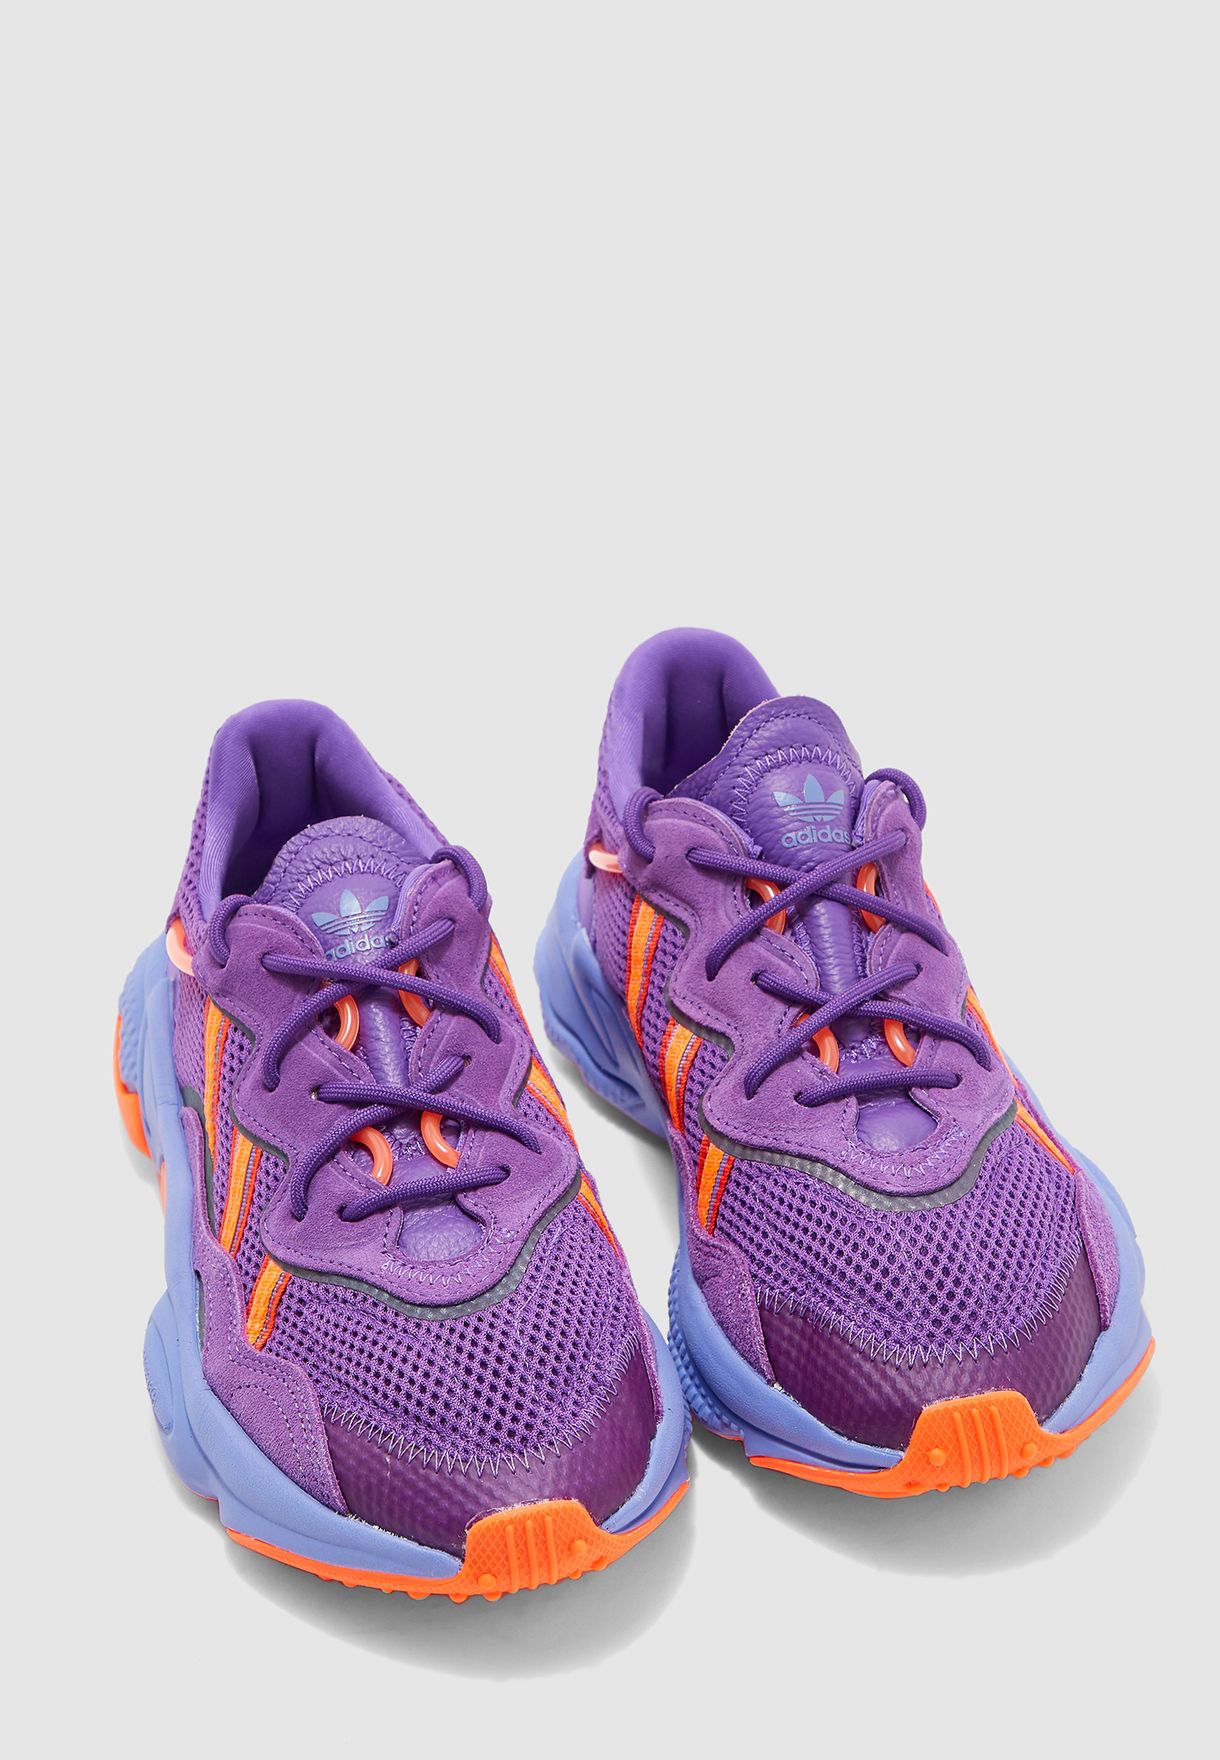 adidas ozweego purple orange